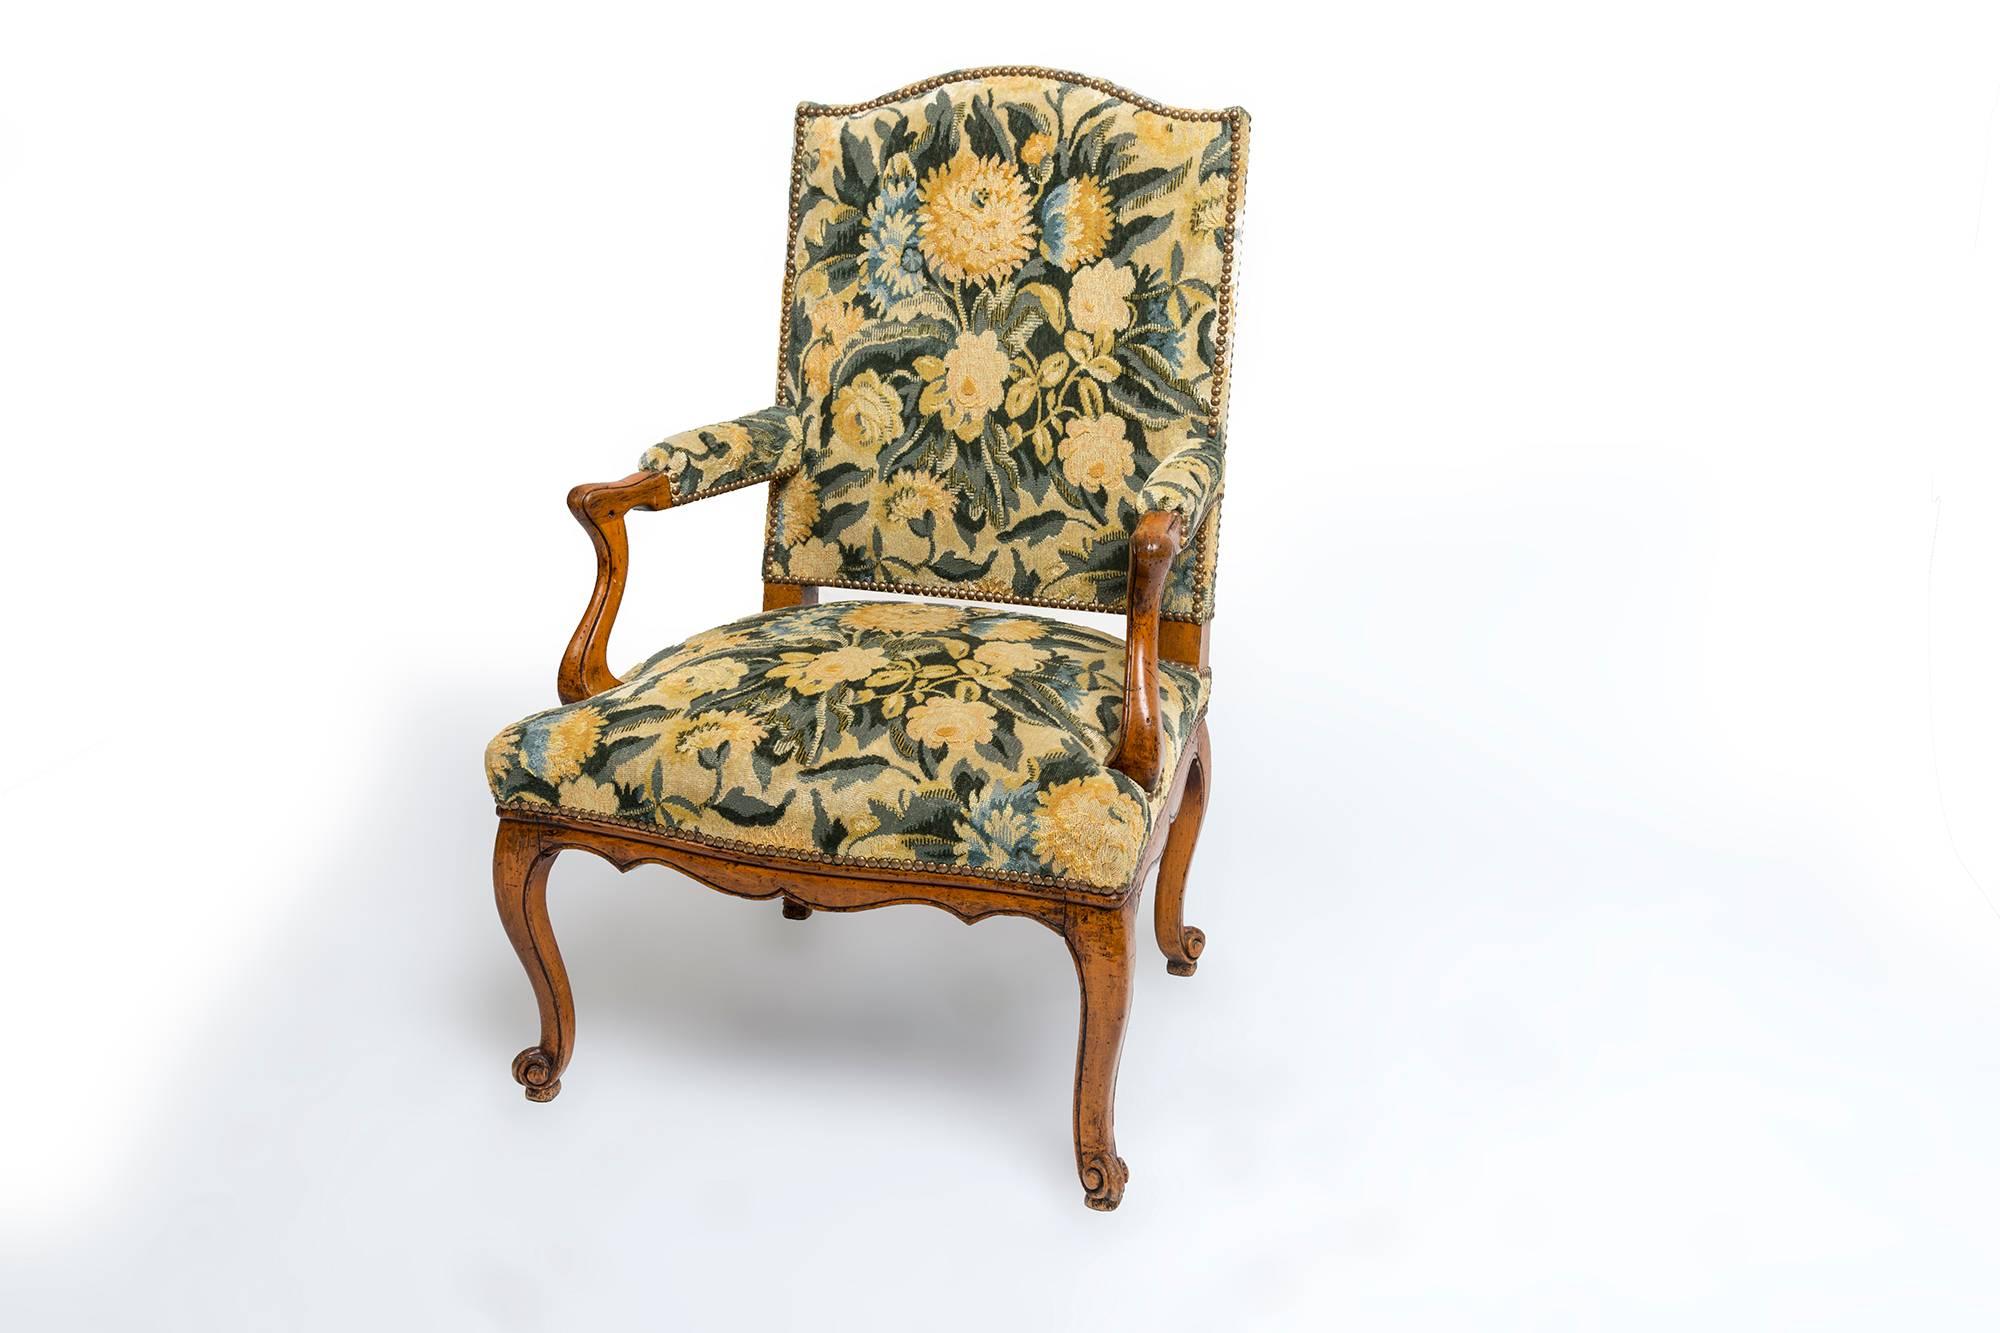 A wonderful pair of Regency Louis XVI chairs, France, 19th century.